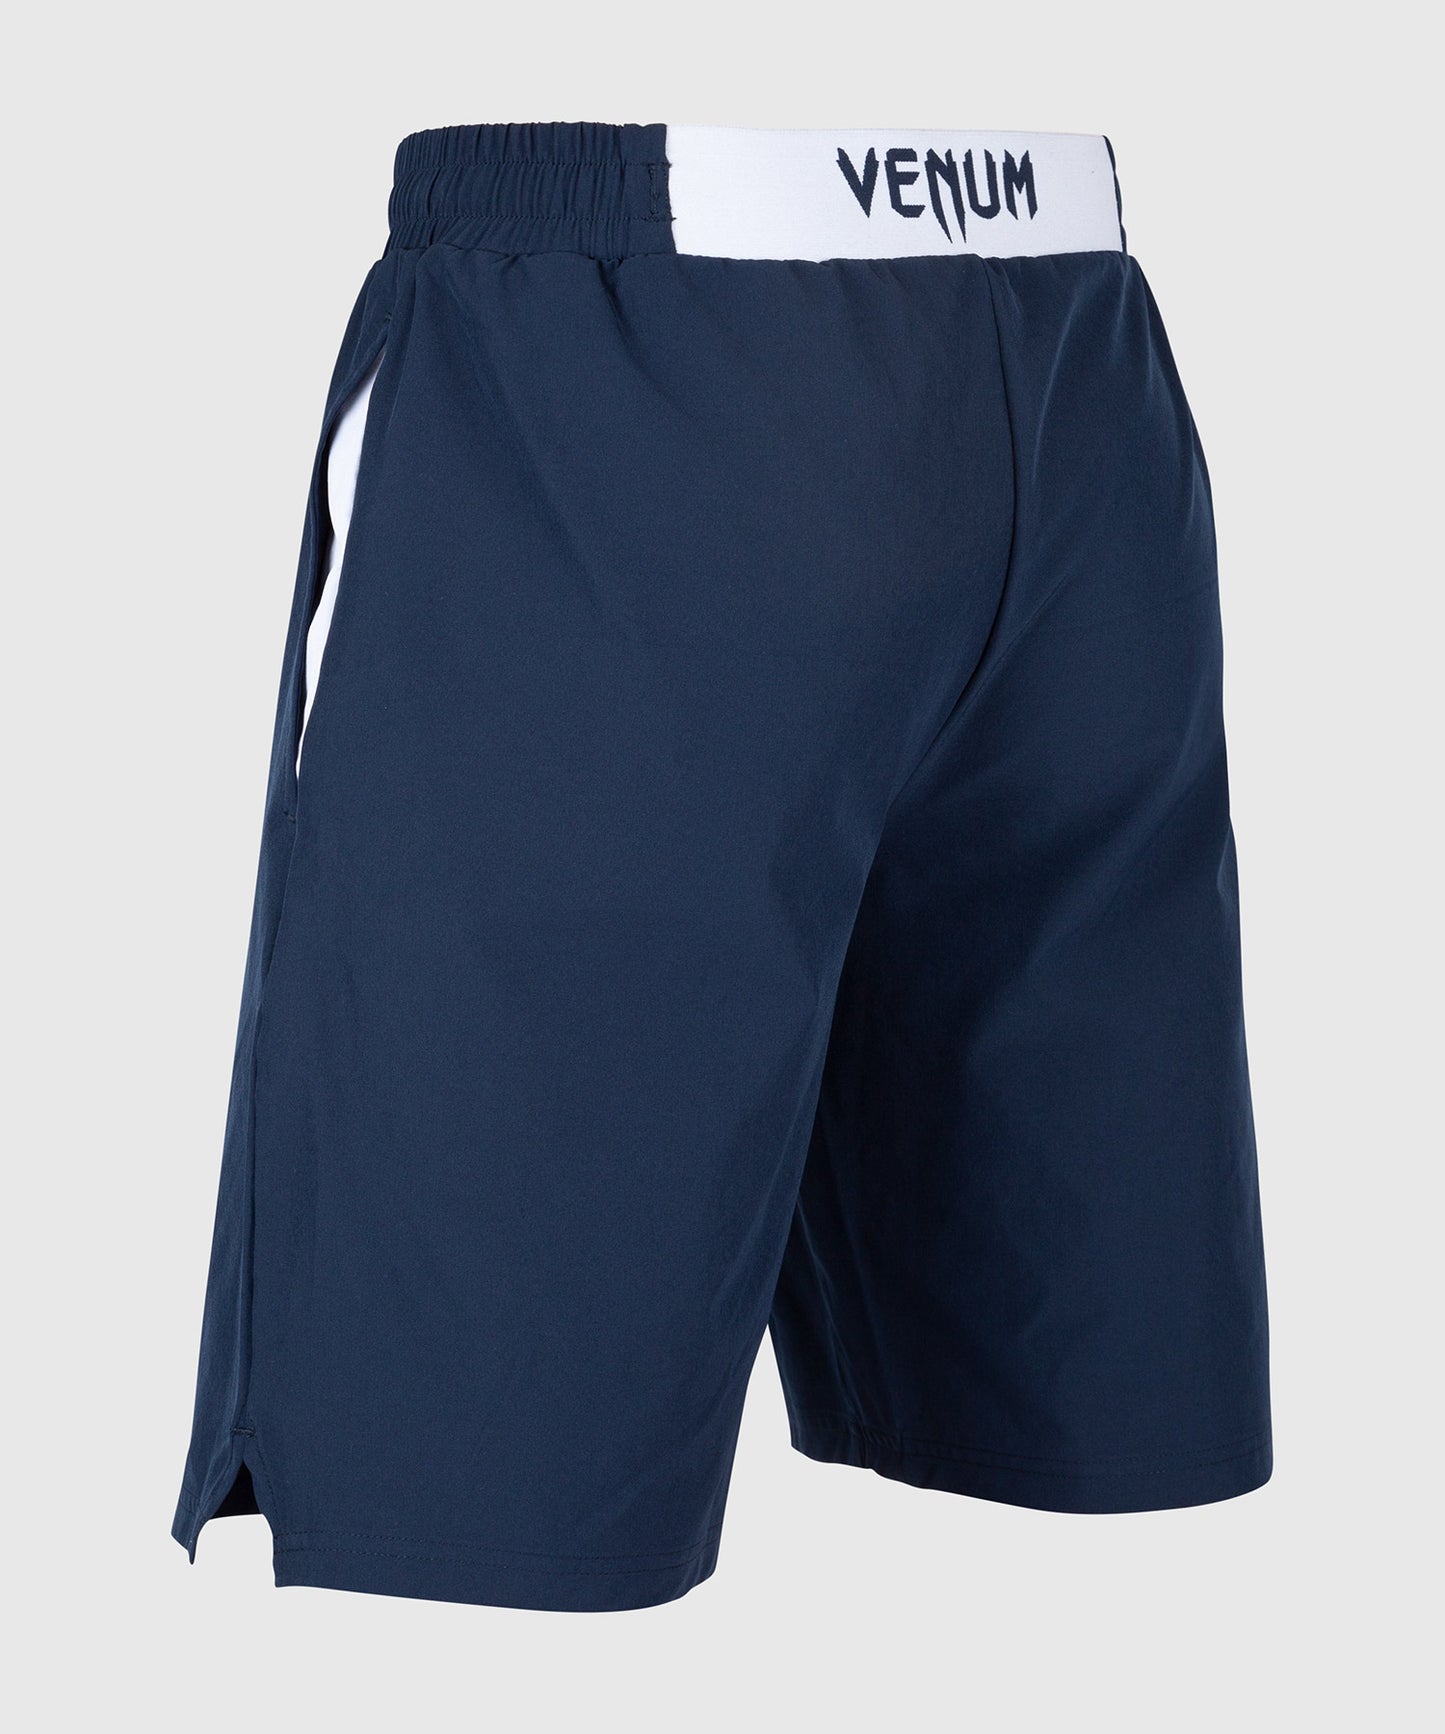 Venum Classic Training Shorts - Navy blue